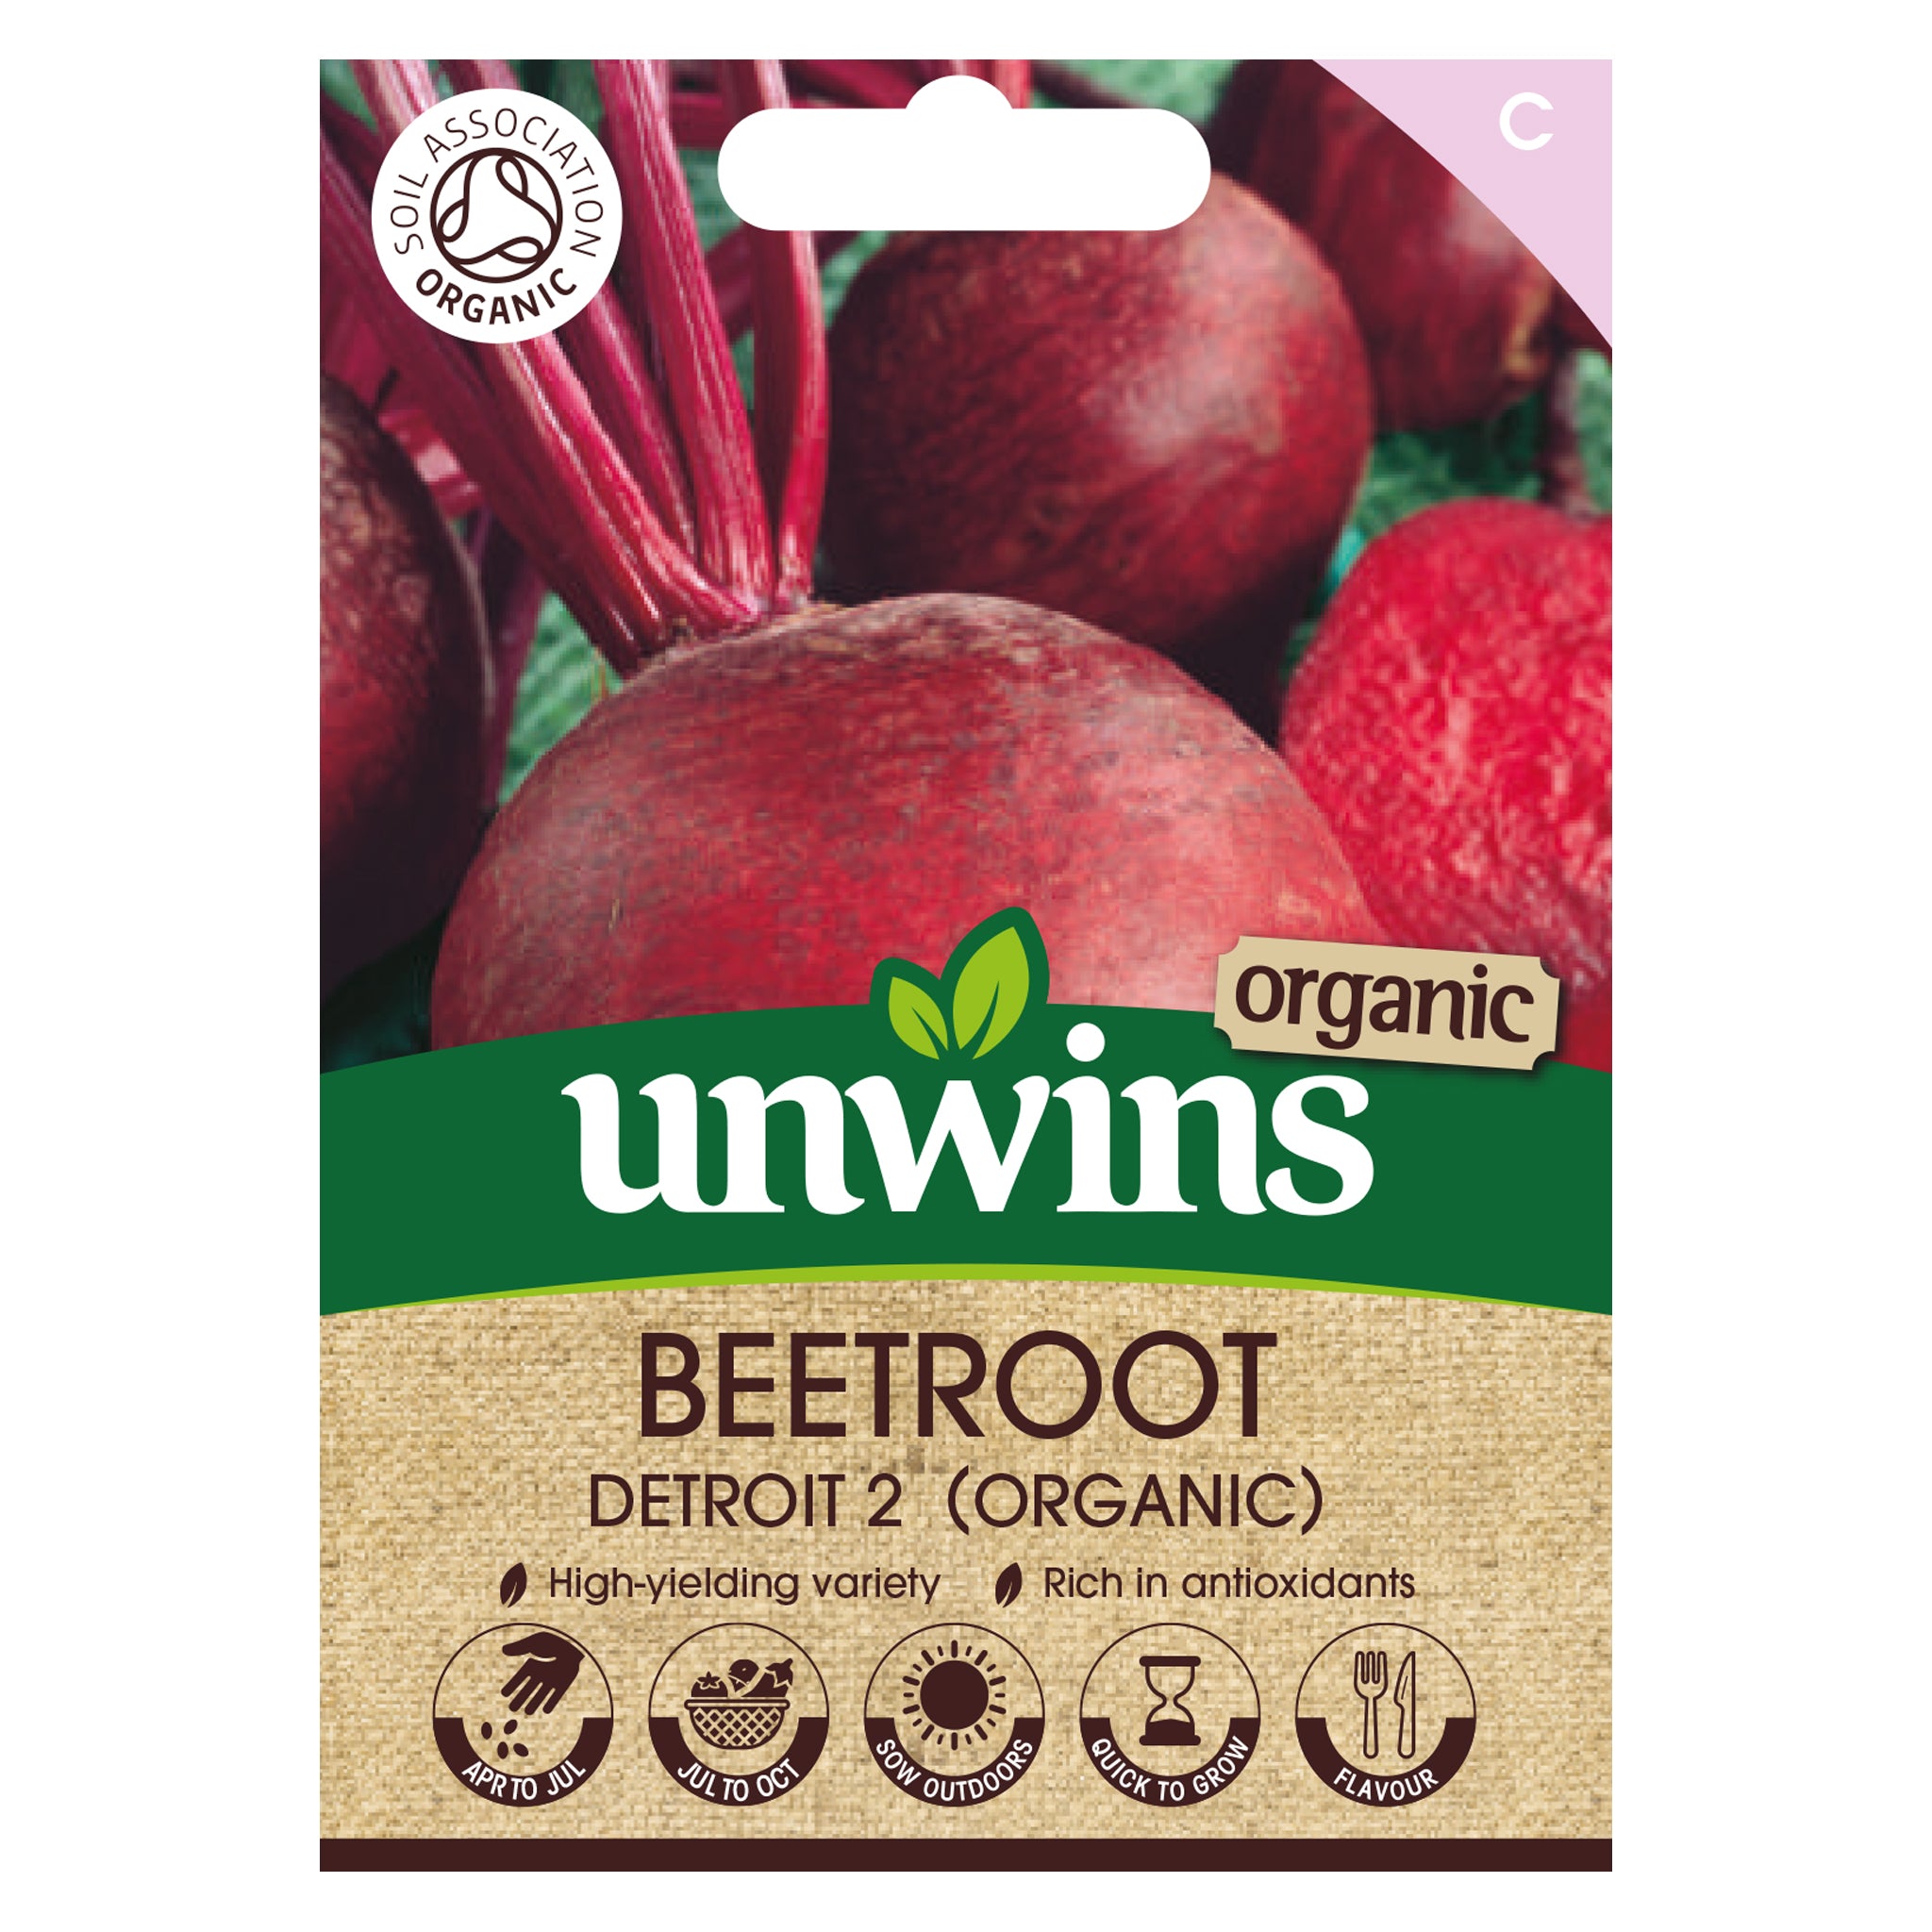 Unwins Organic Beetroot Detroit 2 Seeds